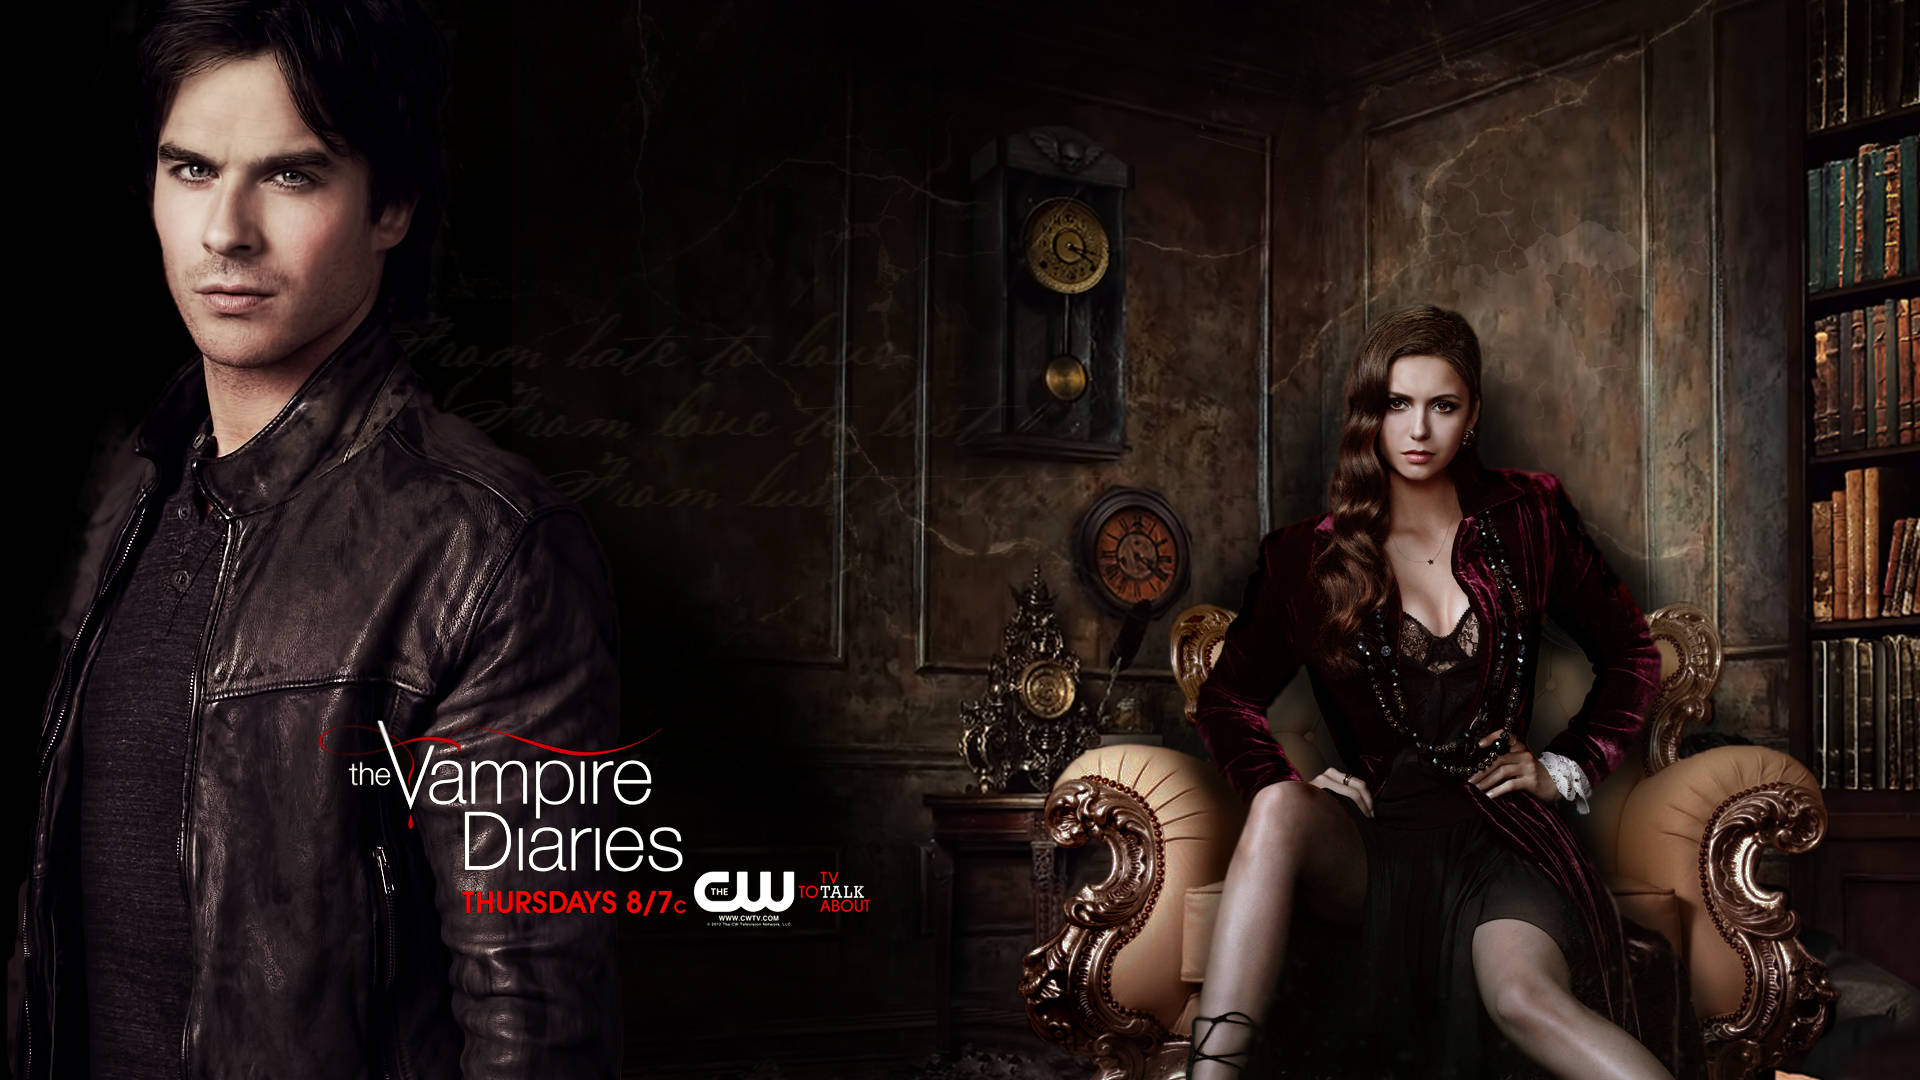 The Vampire Diaries Season 4 Poster